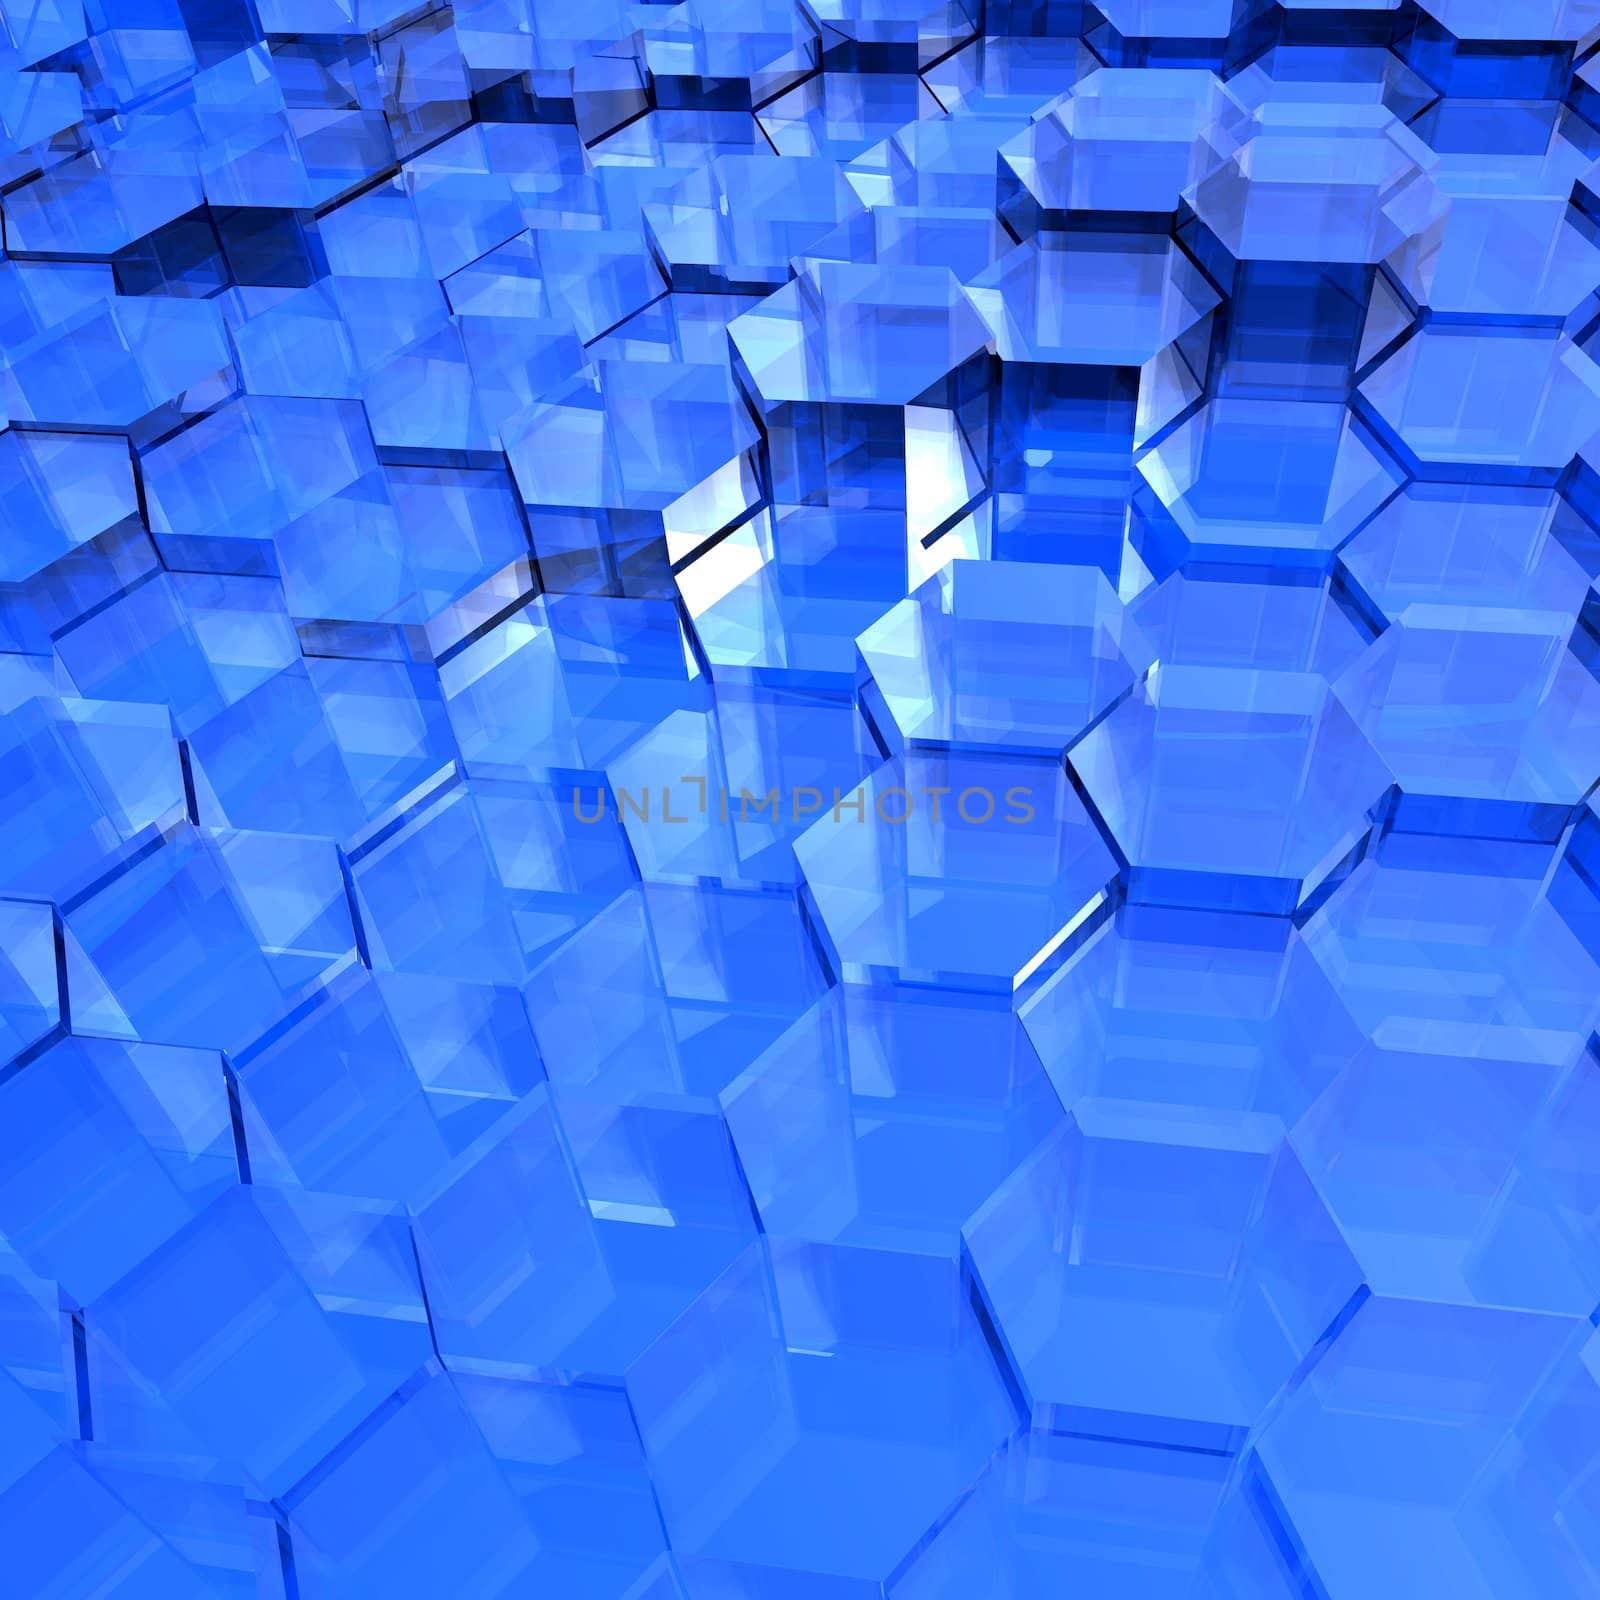 Blue Translucent Hexagons by jasony00